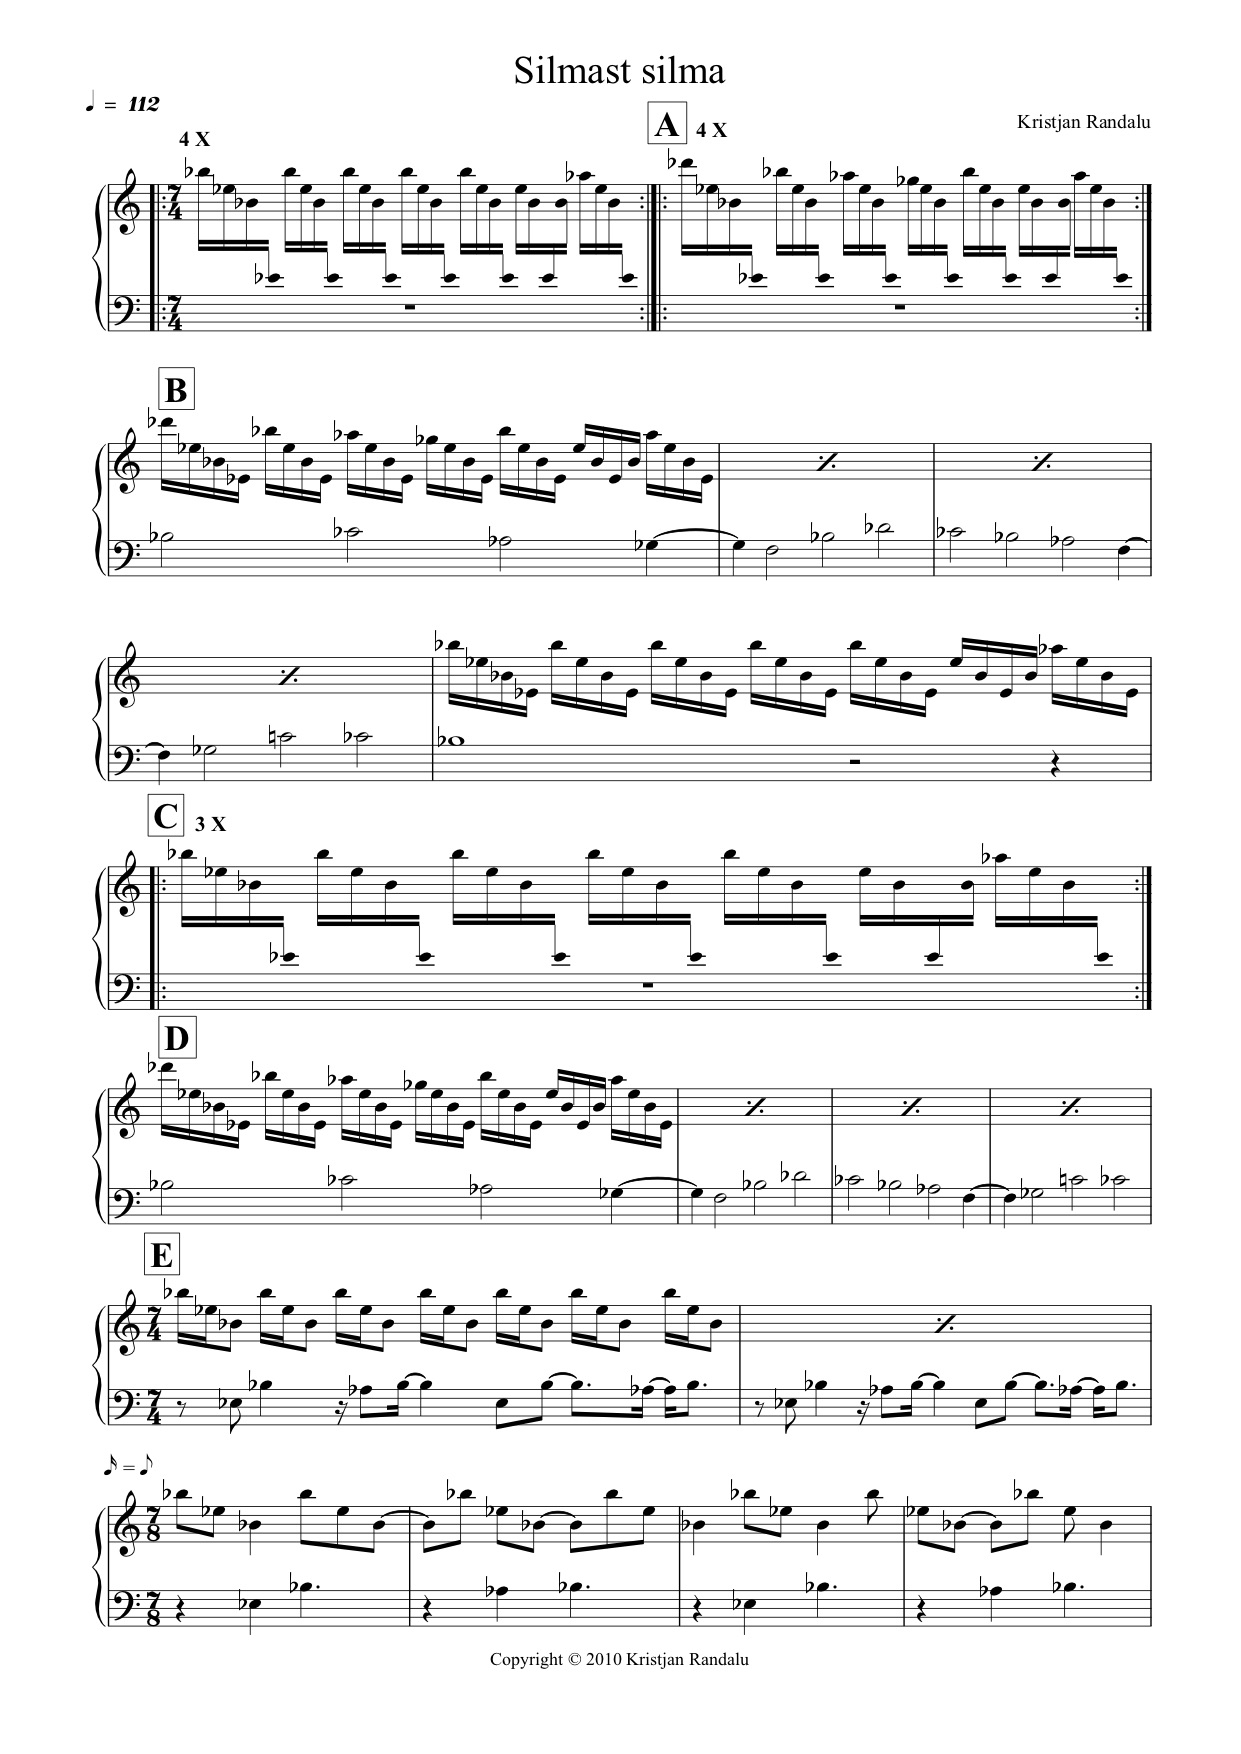 "Silmast silma" Piano Score